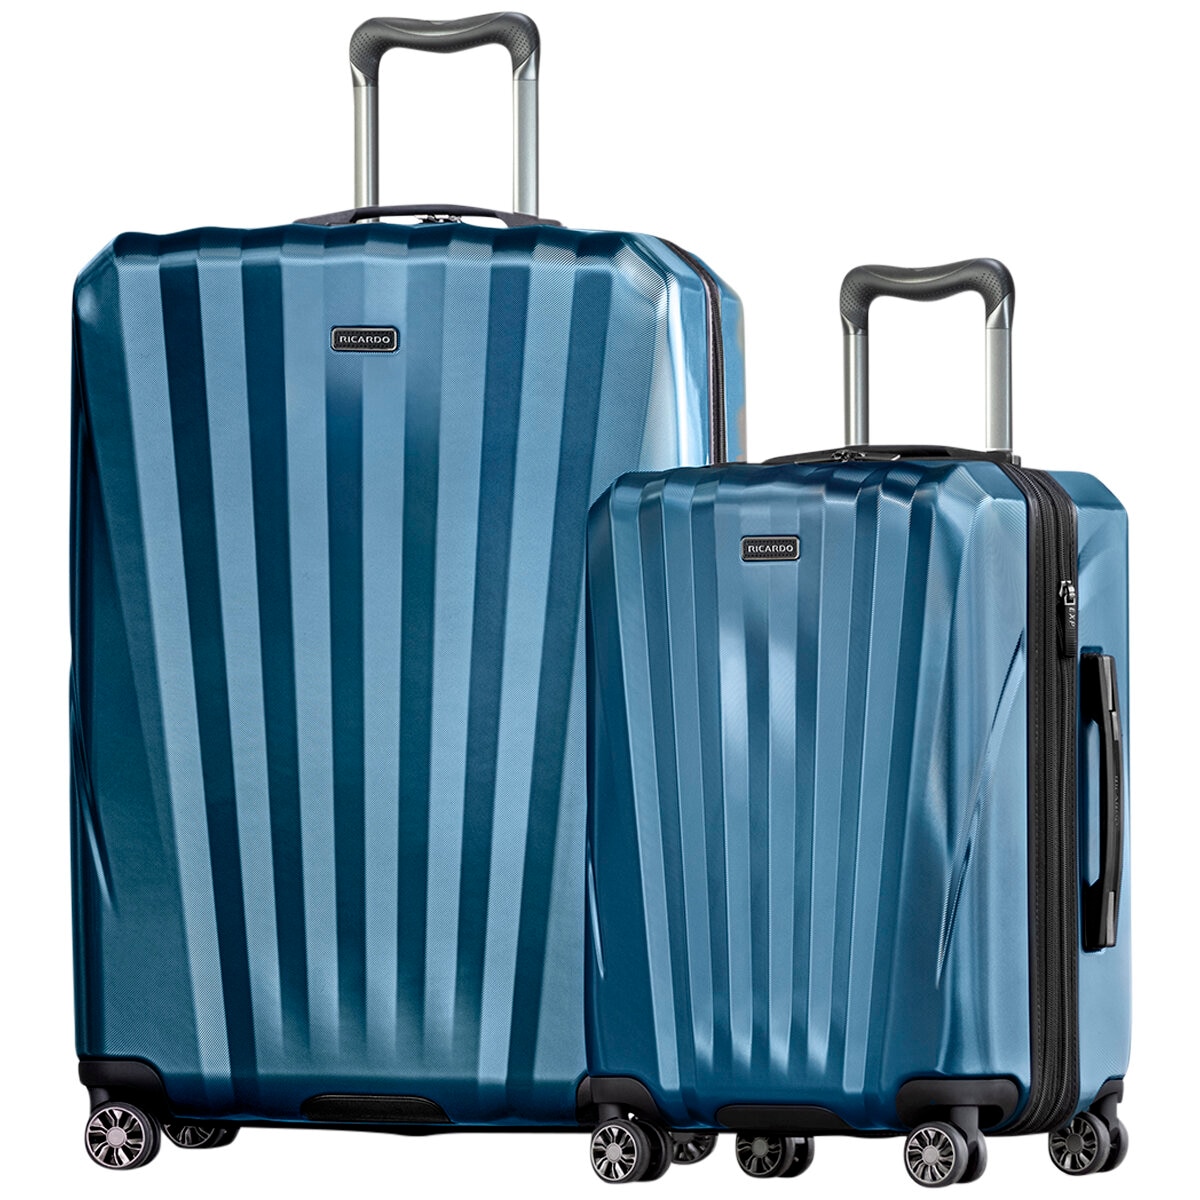 Ricardo Beverly Hills Windsor 2 Piece Luggage Set | Costc...